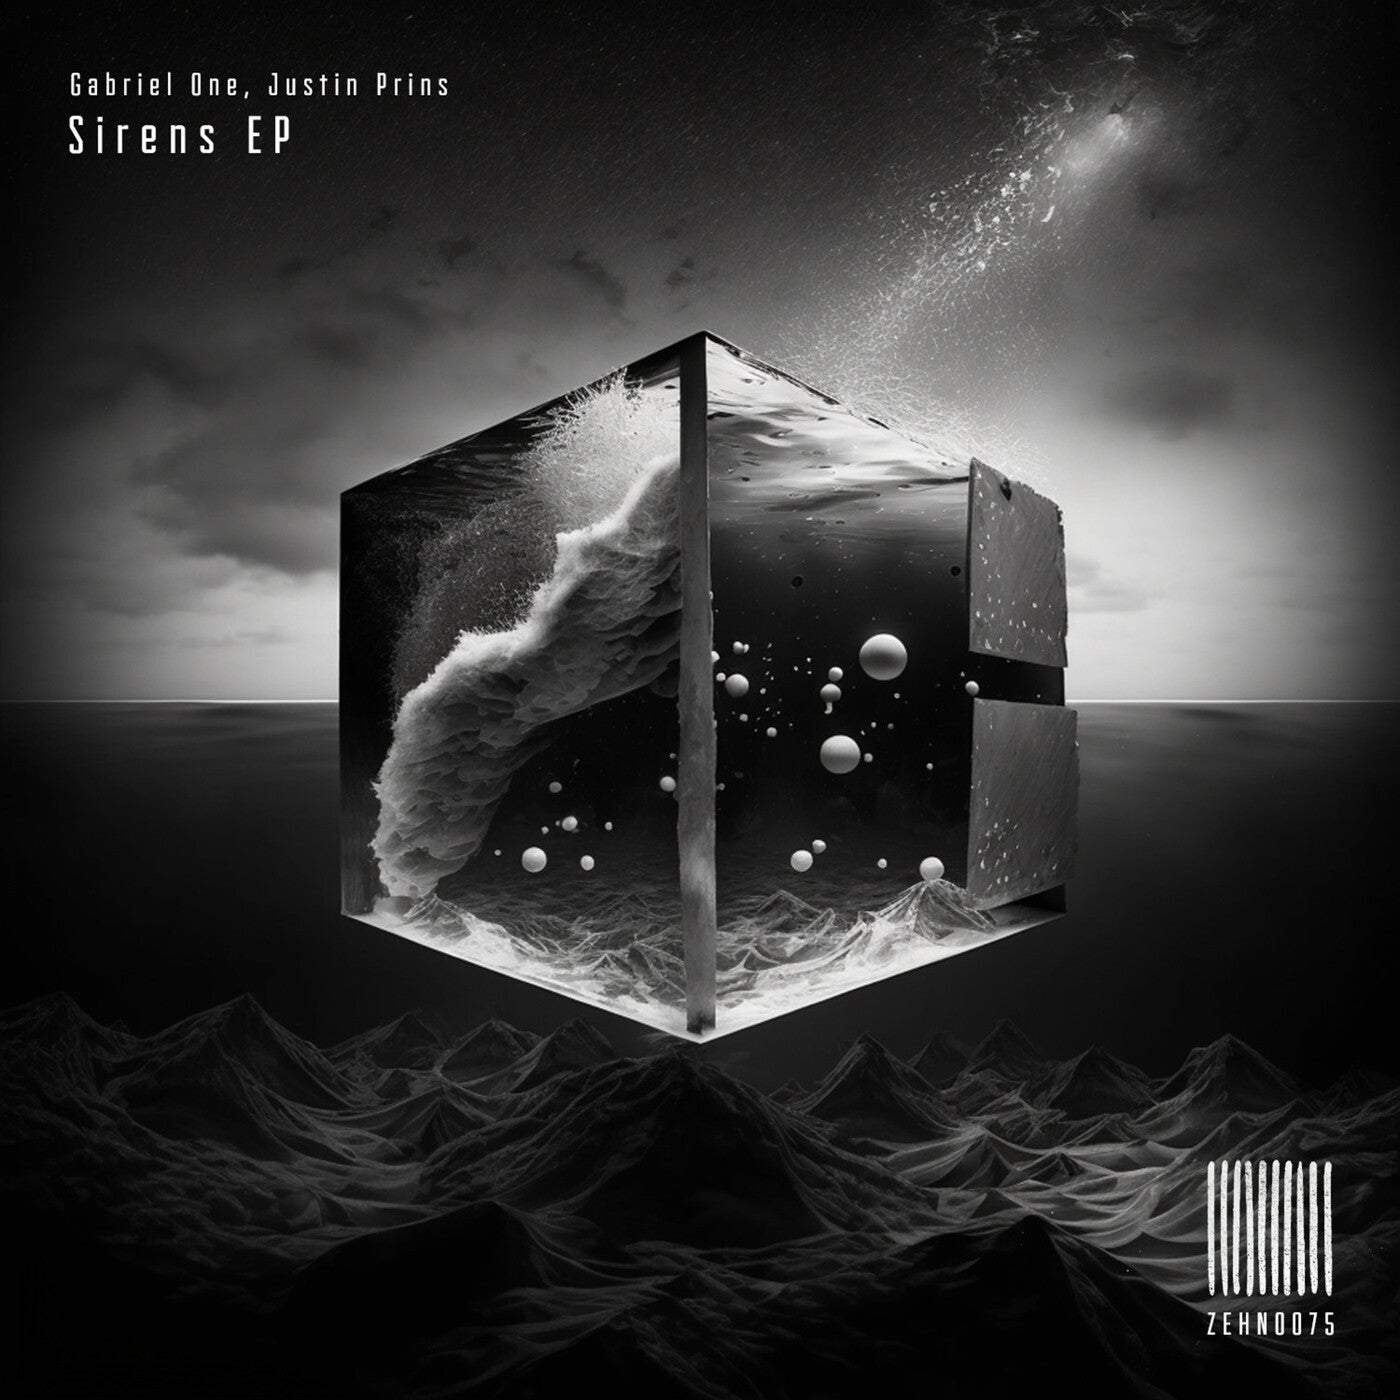 image cover: Gabriel One, Justin Prins - Sirens EP / ZEHN0075DJ